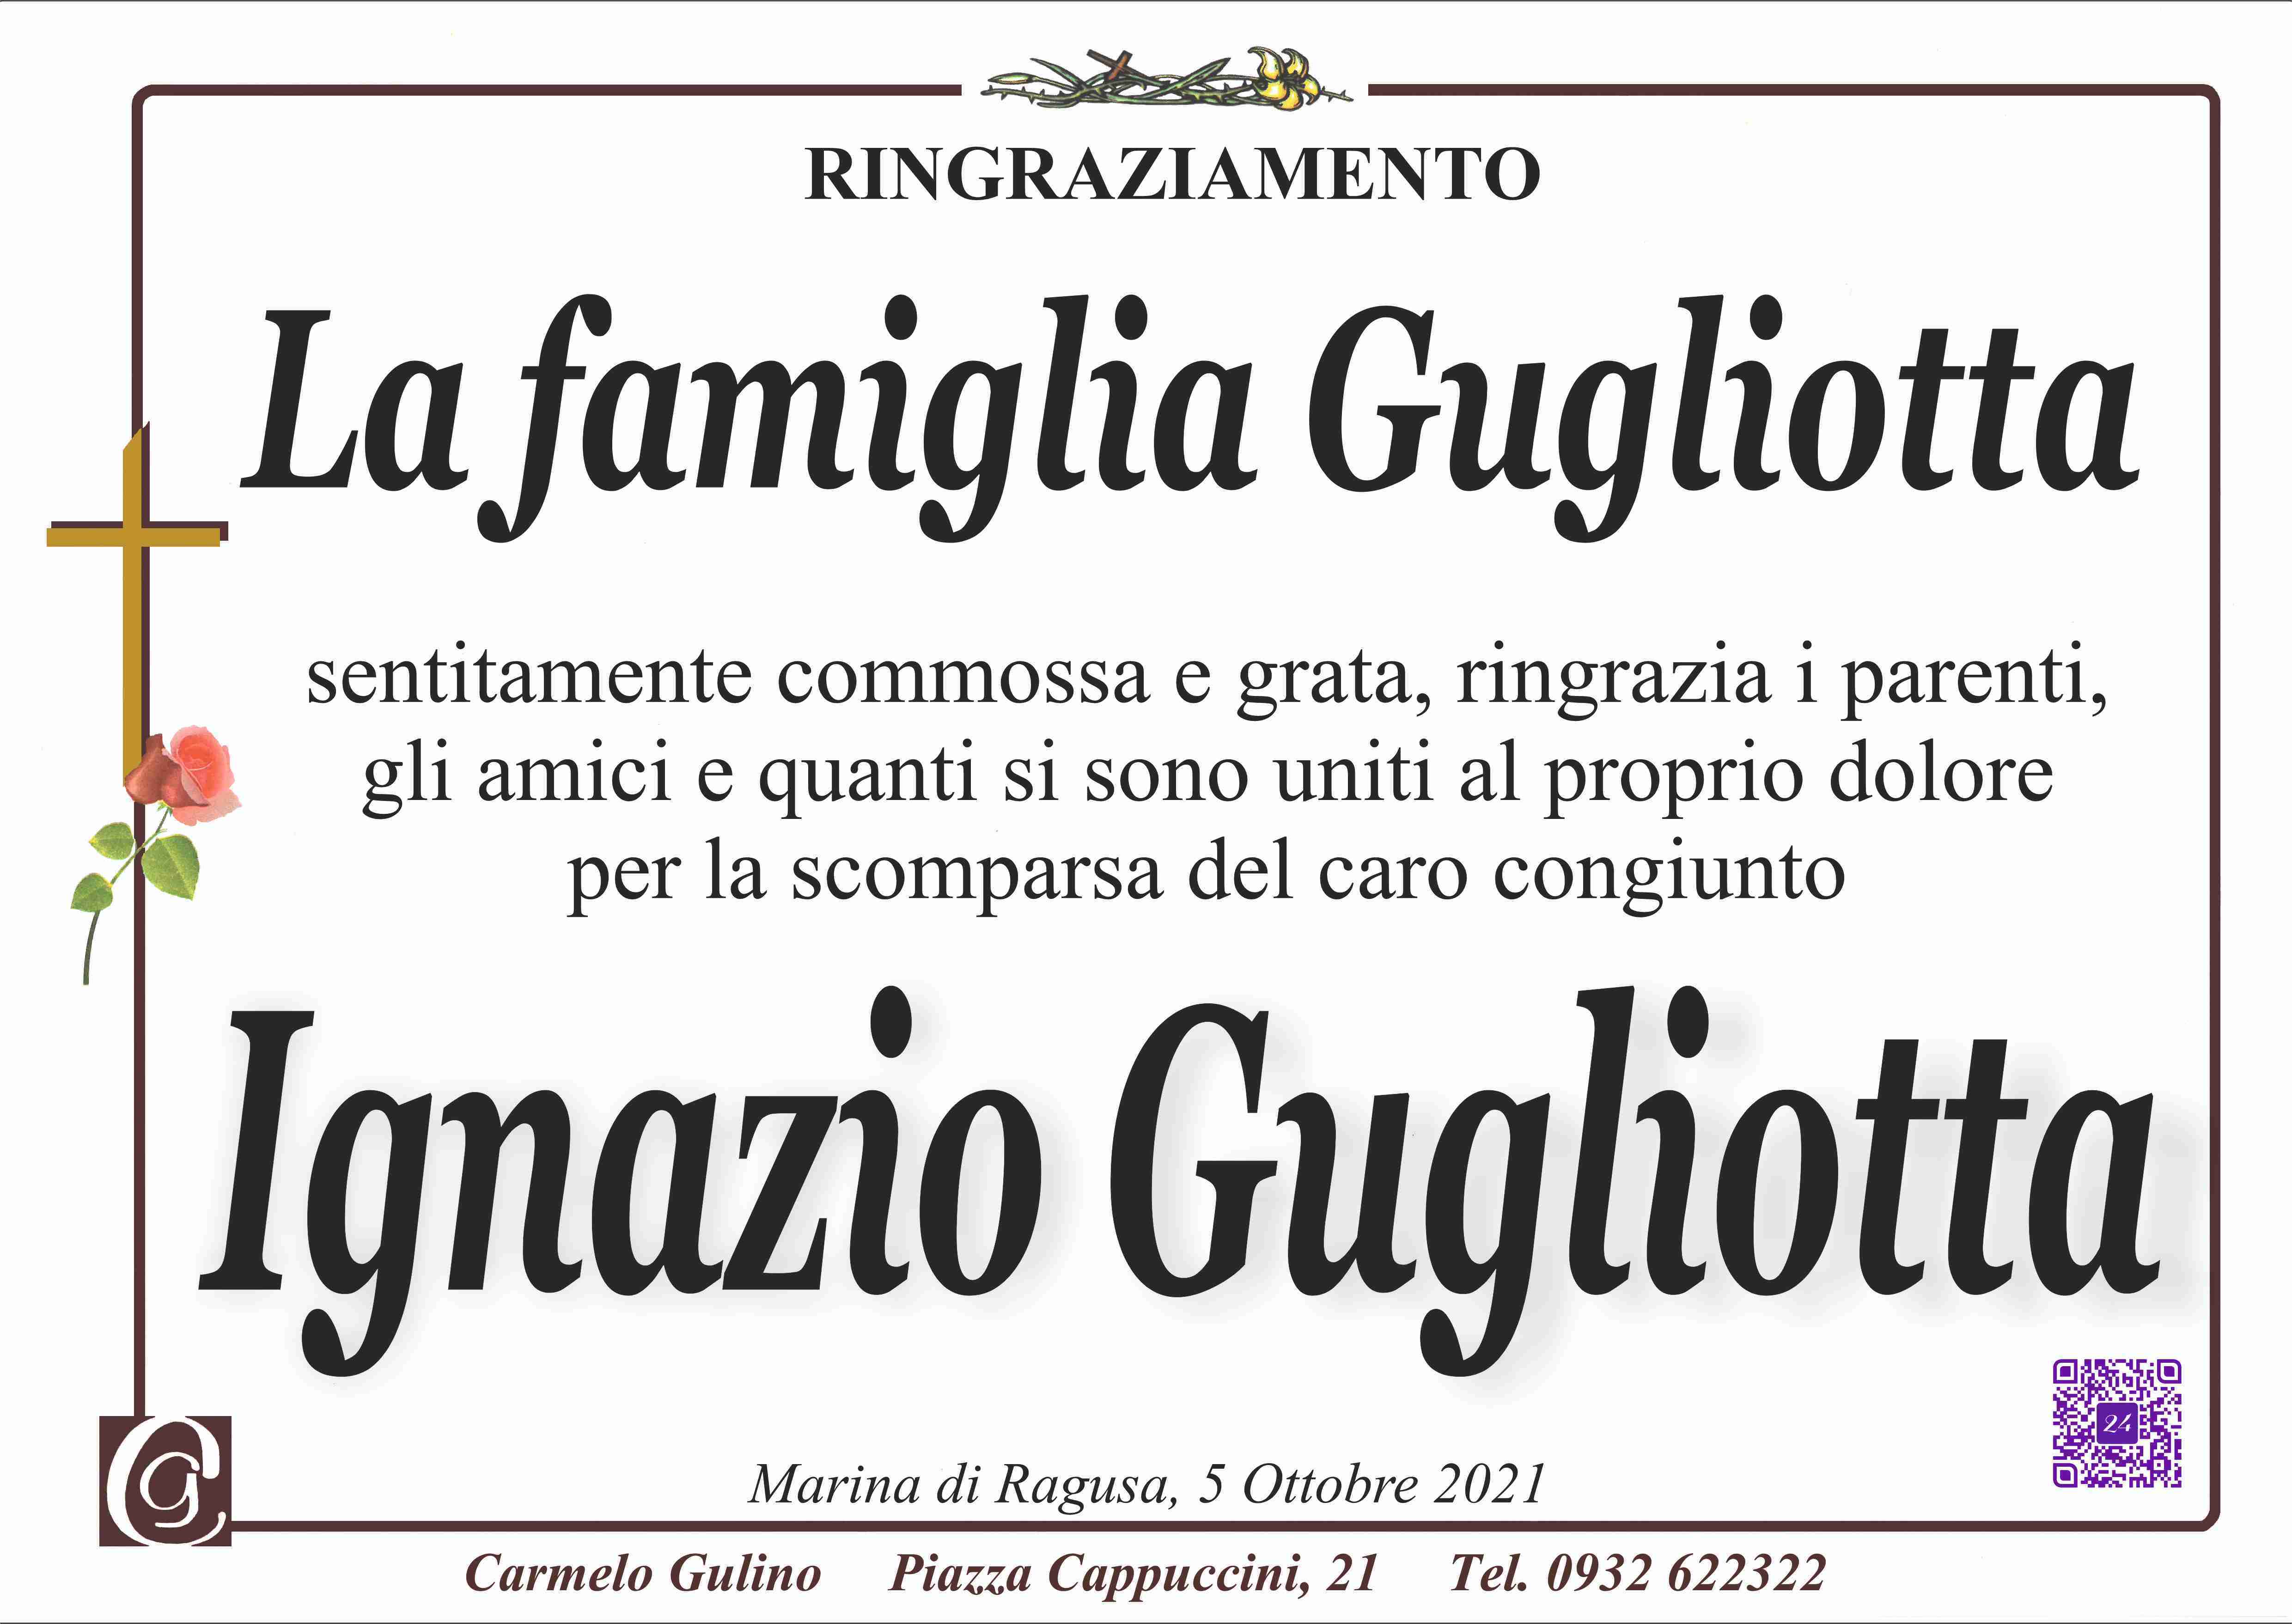 Ignazio Gugliotta